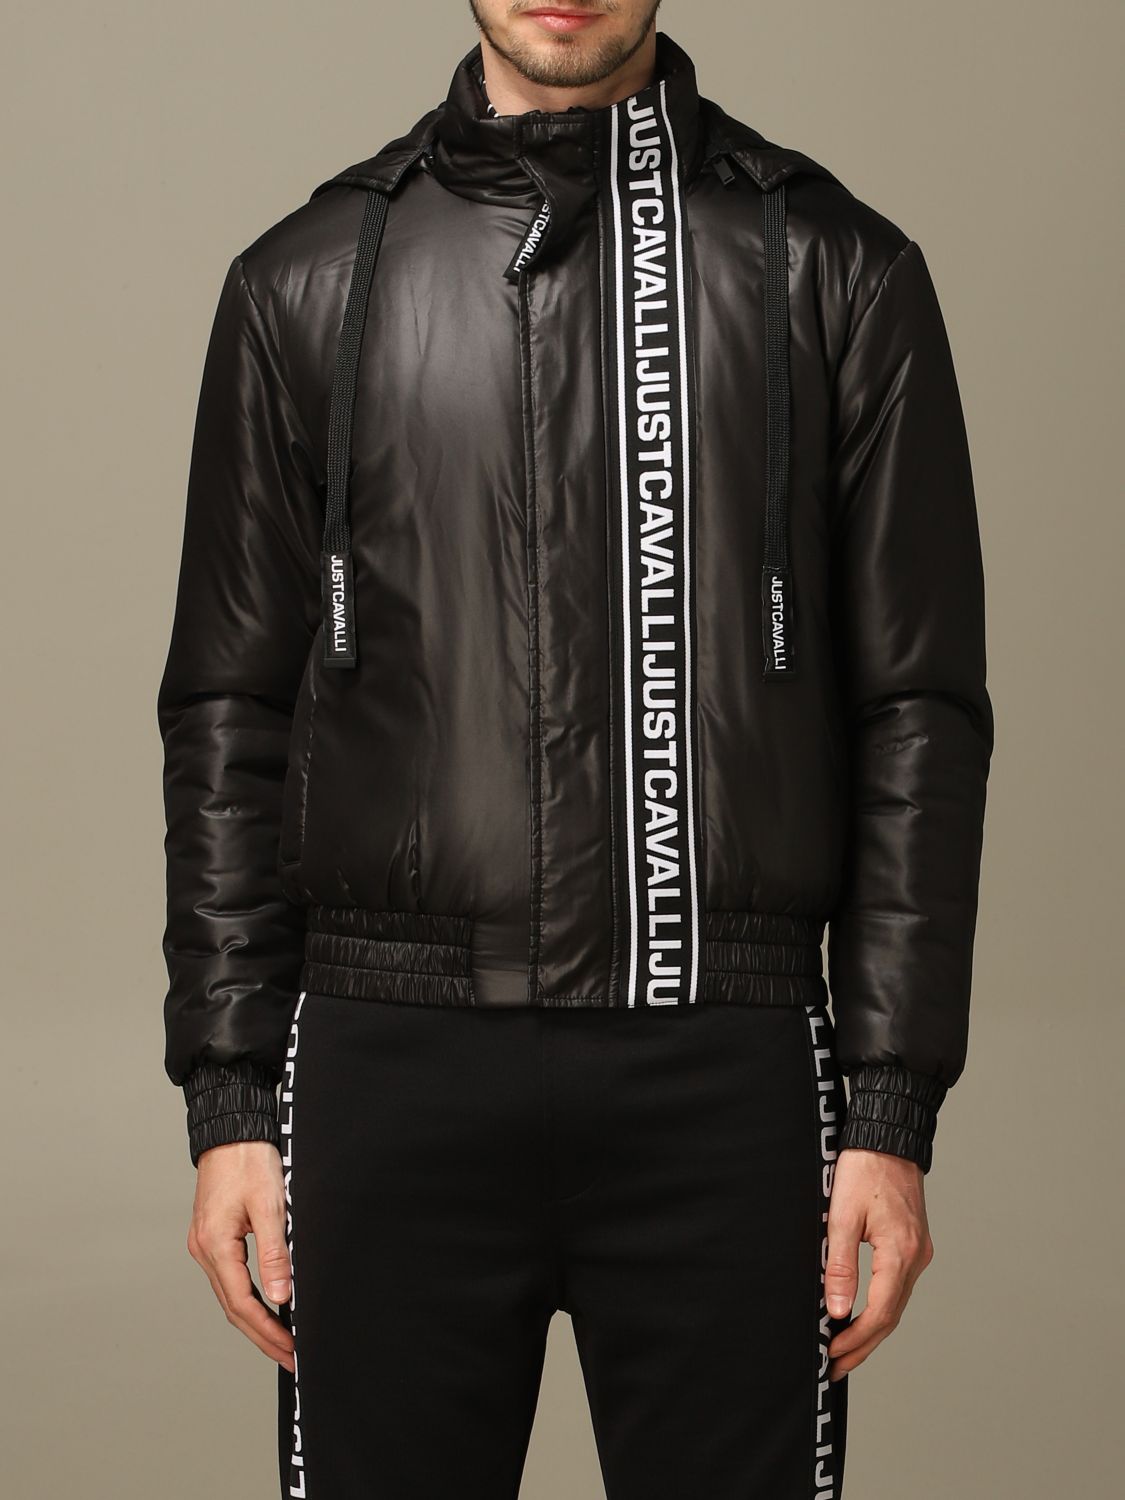 uitroepen pijnlijk perzik Just Cavalli Outlet: bomber in nylon with hood and logo - Black | Just  Cavalli jacket S01AM0338 N39530 online on GIGLIO.COM